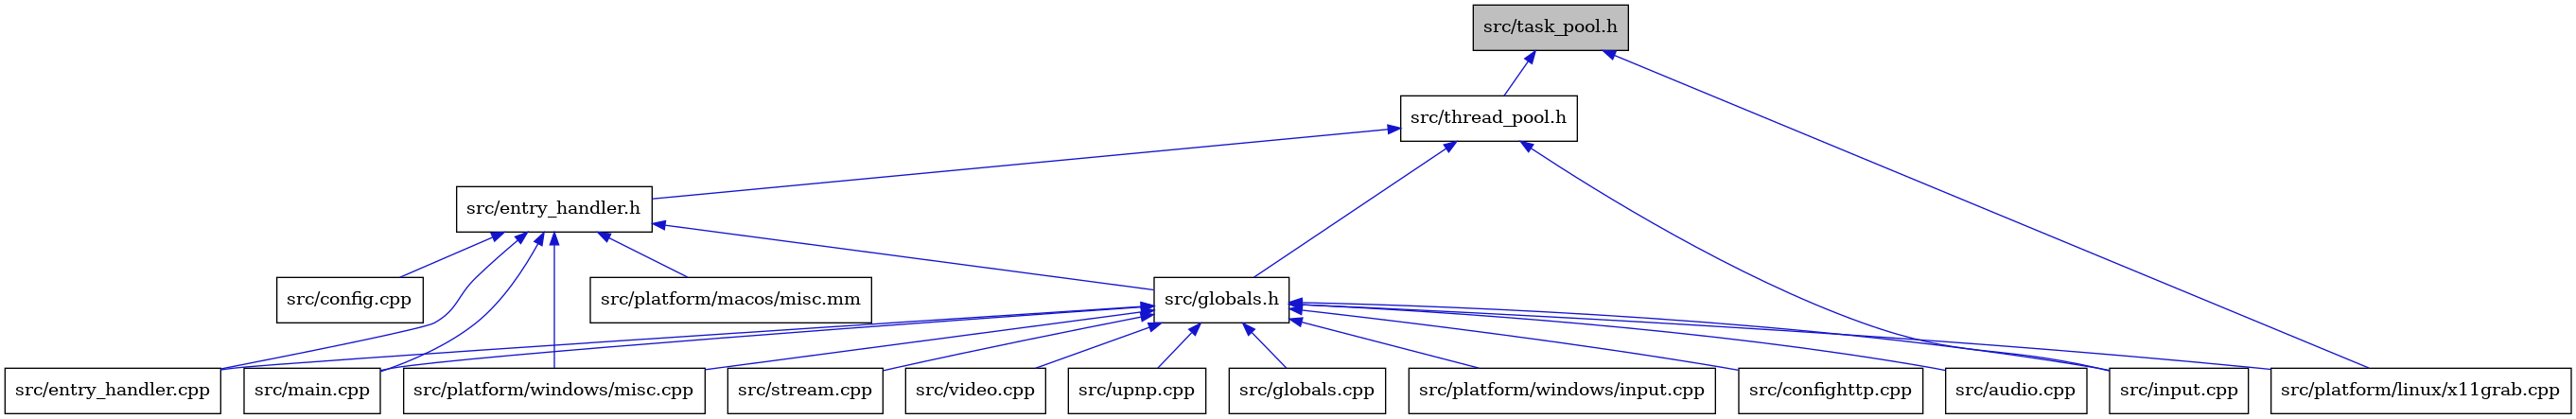 digraph {
    graph [bgcolor="#00000000"]
    node [shape=rectangle style=filled fillcolor="#FFFFFF" font=Helvetica padding=2]
    edge [color="#1414CE"]
    "16" [label="src/upnp.cpp" tooltip="src/upnp.cpp"]
    "14" [label="src/platform/windows/misc.cpp" tooltip="src/platform/windows/misc.cpp"]
    "18" [label="src/platform/macos/misc.mm" tooltip="src/platform/macos/misc.mm"]
    "3" [label="src/thread_pool.h" tooltip="src/thread_pool.h"]
    "2" [label="src/platform/linux/x11grab.cpp" tooltip="src/platform/linux/x11grab.cpp"]
    "10" [label="src/globals.cpp" tooltip="src/globals.cpp"]
    "7" [label="src/globals.h" tooltip="src/globals.h"]
    "4" [label="src/entry_handler.h" tooltip="src/entry_handler.h"]
    "5" [label="src/config.cpp" tooltip="src/config.cpp"]
    "13" [label="src/platform/windows/input.cpp" tooltip="src/platform/windows/input.cpp"]
    "11" [label="src/input.cpp" tooltip="src/input.cpp"]
    "6" [label="src/entry_handler.cpp" tooltip="src/entry_handler.cpp"]
    "1" [label="src/task_pool.h" tooltip="src/task_pool.h" fillcolor="#BFBFBF"]
    "9" [label="src/confighttp.cpp" tooltip="src/confighttp.cpp"]
    "8" [label="src/audio.cpp" tooltip="src/audio.cpp"]
    "15" [label="src/stream.cpp" tooltip="src/stream.cpp"]
    "12" [label="src/main.cpp" tooltip="src/main.cpp"]
    "17" [label="src/video.cpp" tooltip="src/video.cpp"]
    "3" -> "4" [dir=back tooltip="include"]
    "3" -> "7" [dir=back tooltip="include"]
    "3" -> "11" [dir=back tooltip="include"]
    "7" -> "8" [dir=back tooltip="include"]
    "7" -> "9" [dir=back tooltip="include"]
    "7" -> "6" [dir=back tooltip="include"]
    "7" -> "10" [dir=back tooltip="include"]
    "7" -> "11" [dir=back tooltip="include"]
    "7" -> "12" [dir=back tooltip="include"]
    "7" -> "2" [dir=back tooltip="include"]
    "7" -> "13" [dir=back tooltip="include"]
    "7" -> "14" [dir=back tooltip="include"]
    "7" -> "15" [dir=back tooltip="include"]
    "7" -> "16" [dir=back tooltip="include"]
    "7" -> "17" [dir=back tooltip="include"]
    "4" -> "5" [dir=back tooltip="include"]
    "4" -> "6" [dir=back tooltip="include"]
    "4" -> "7" [dir=back tooltip="include"]
    "4" -> "12" [dir=back tooltip="include"]
    "4" -> "18" [dir=back tooltip="include"]
    "4" -> "14" [dir=back tooltip="include"]
    "1" -> "2" [dir=back tooltip="include"]
    "1" -> "3" [dir=back tooltip="include"]
}